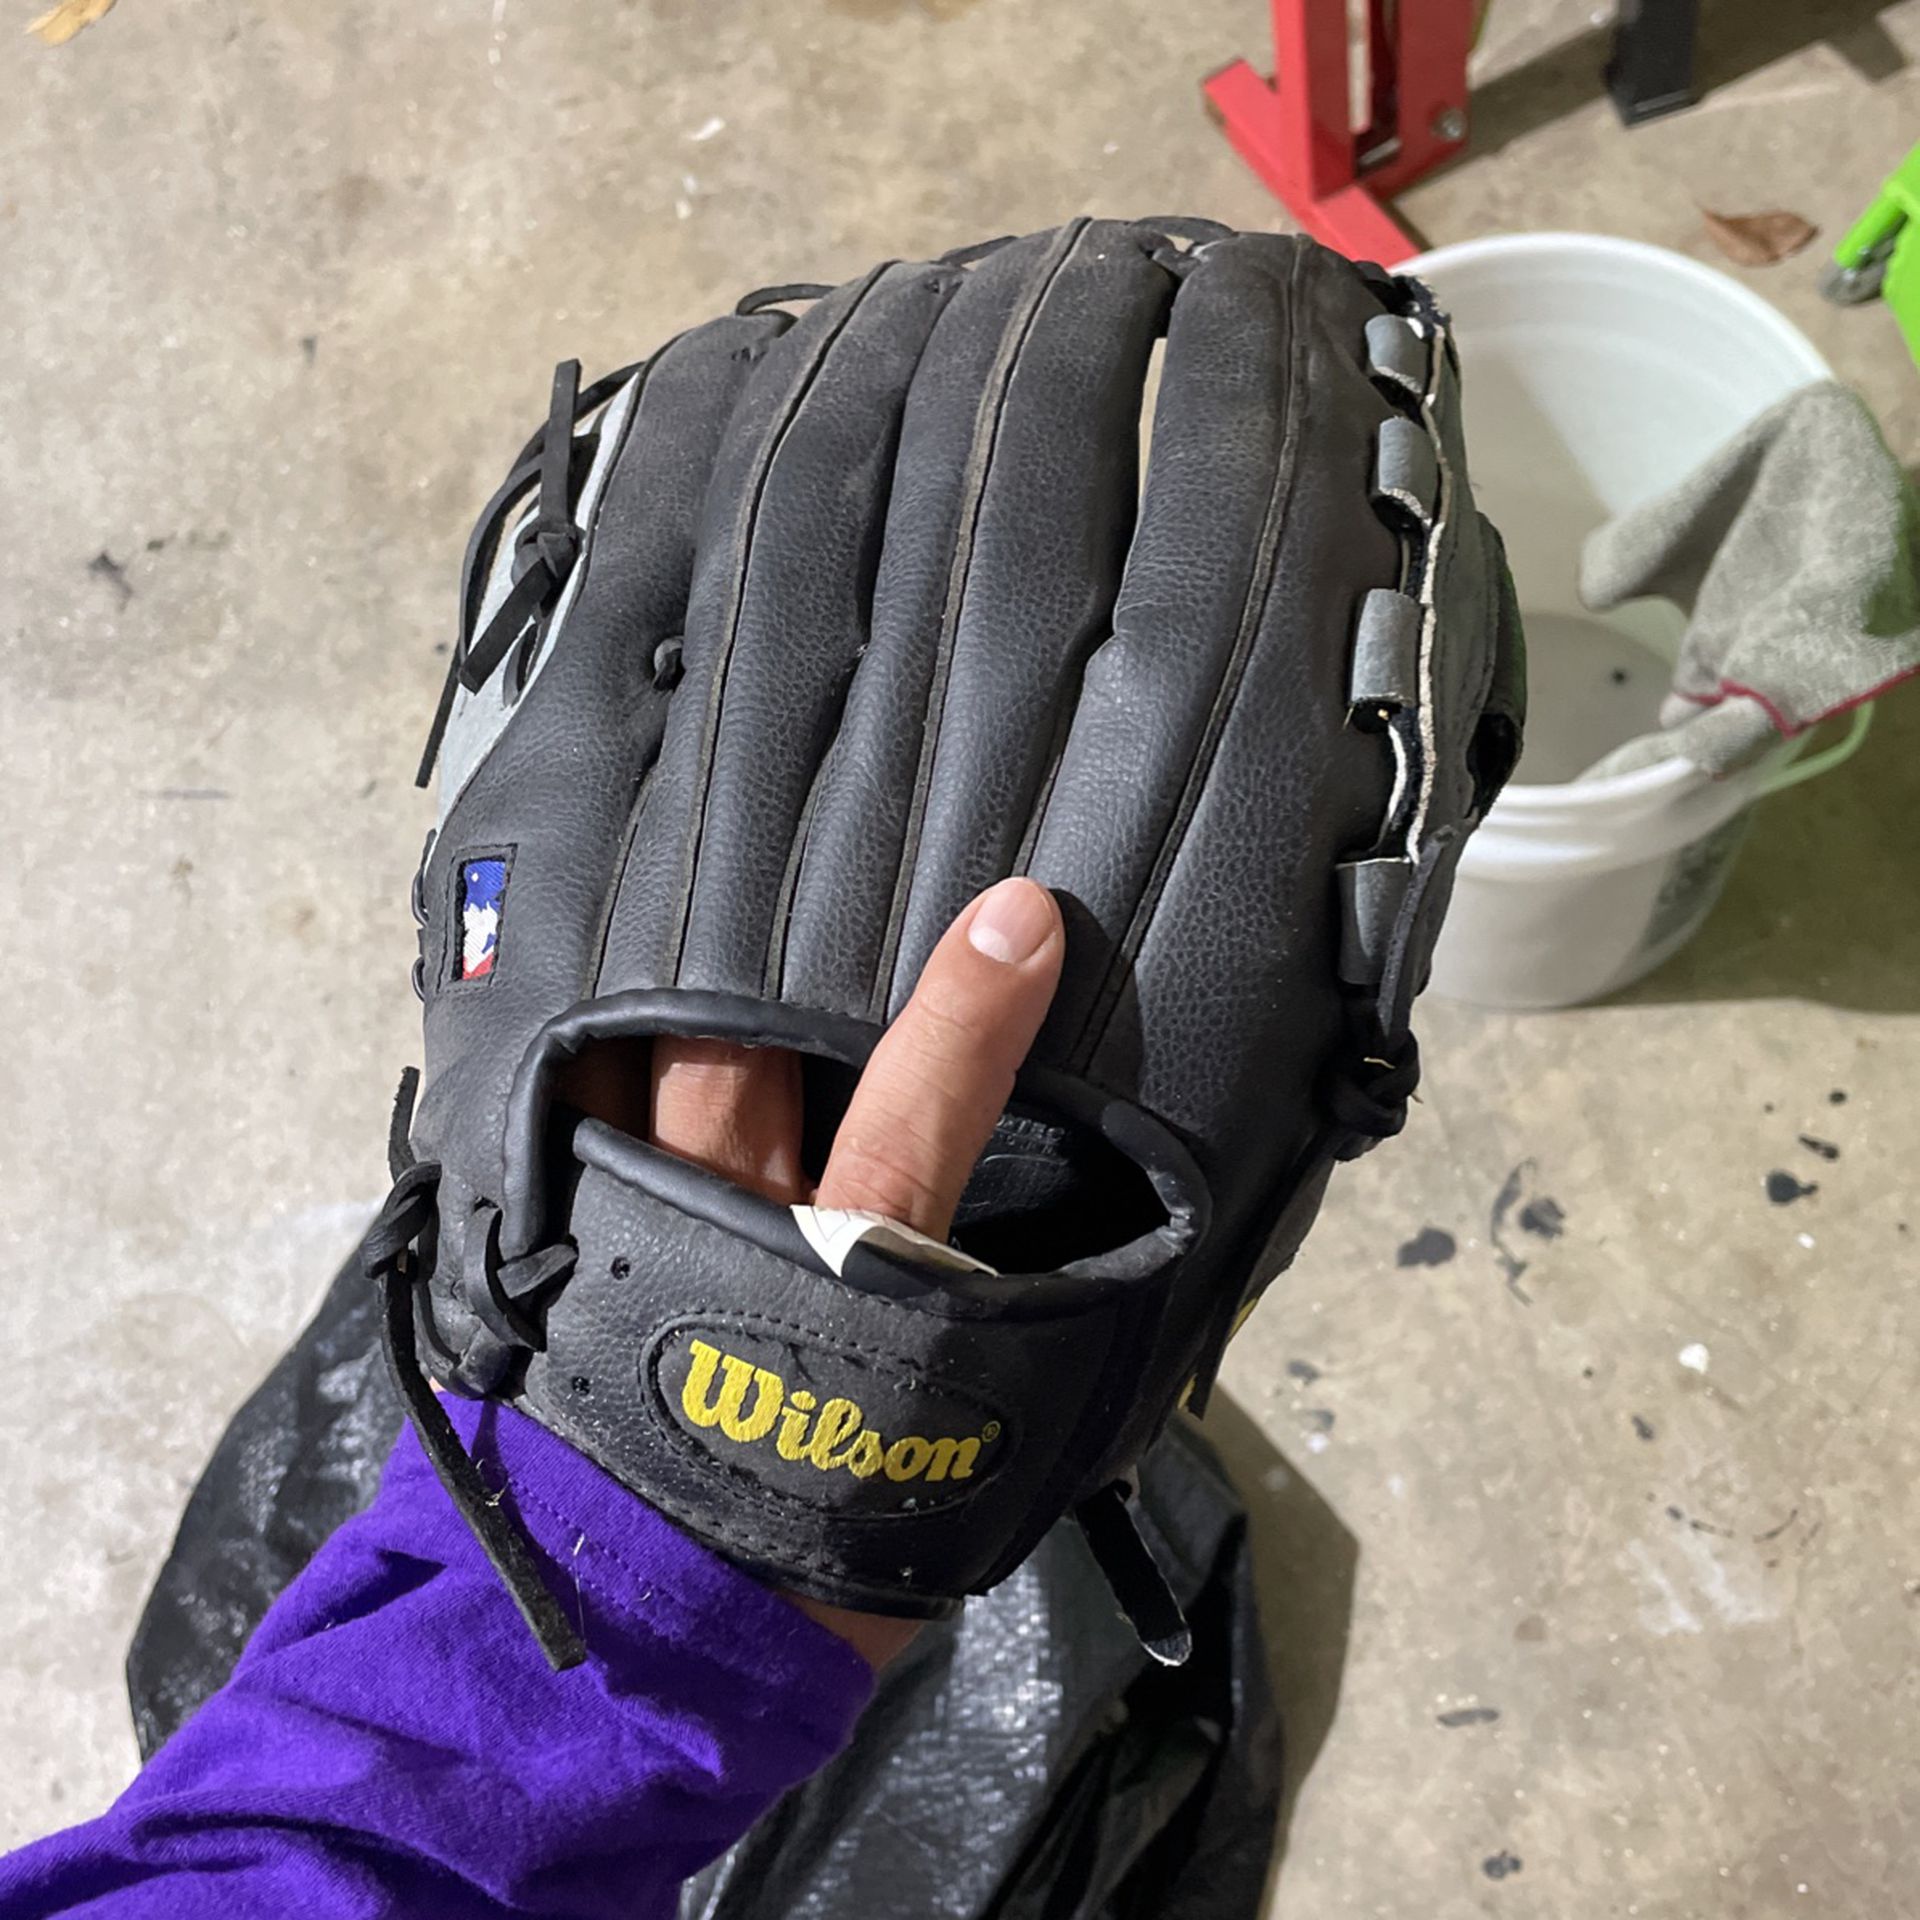 Wilson Softball Glove Size 12 Inch